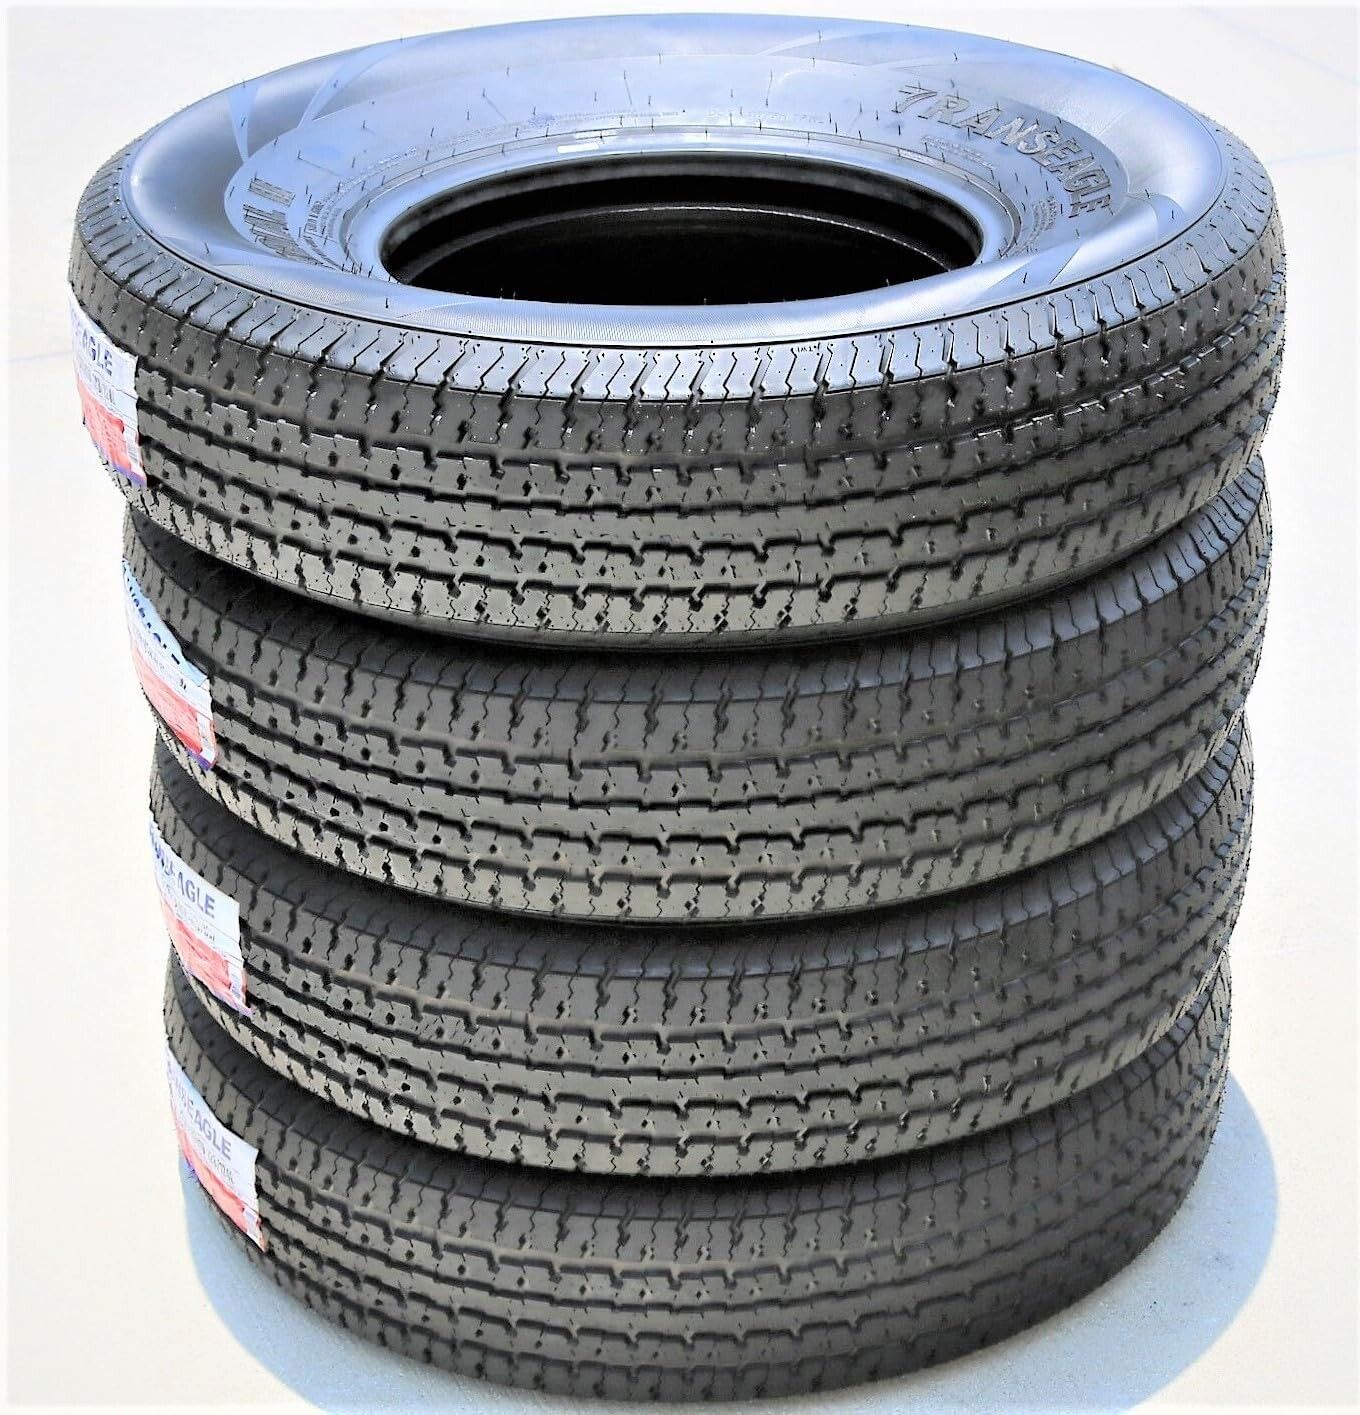 Set of 4 Transeagle ST Radial Tires-ST235/80R16 235/80/16 235/80-16 124/120L LRE